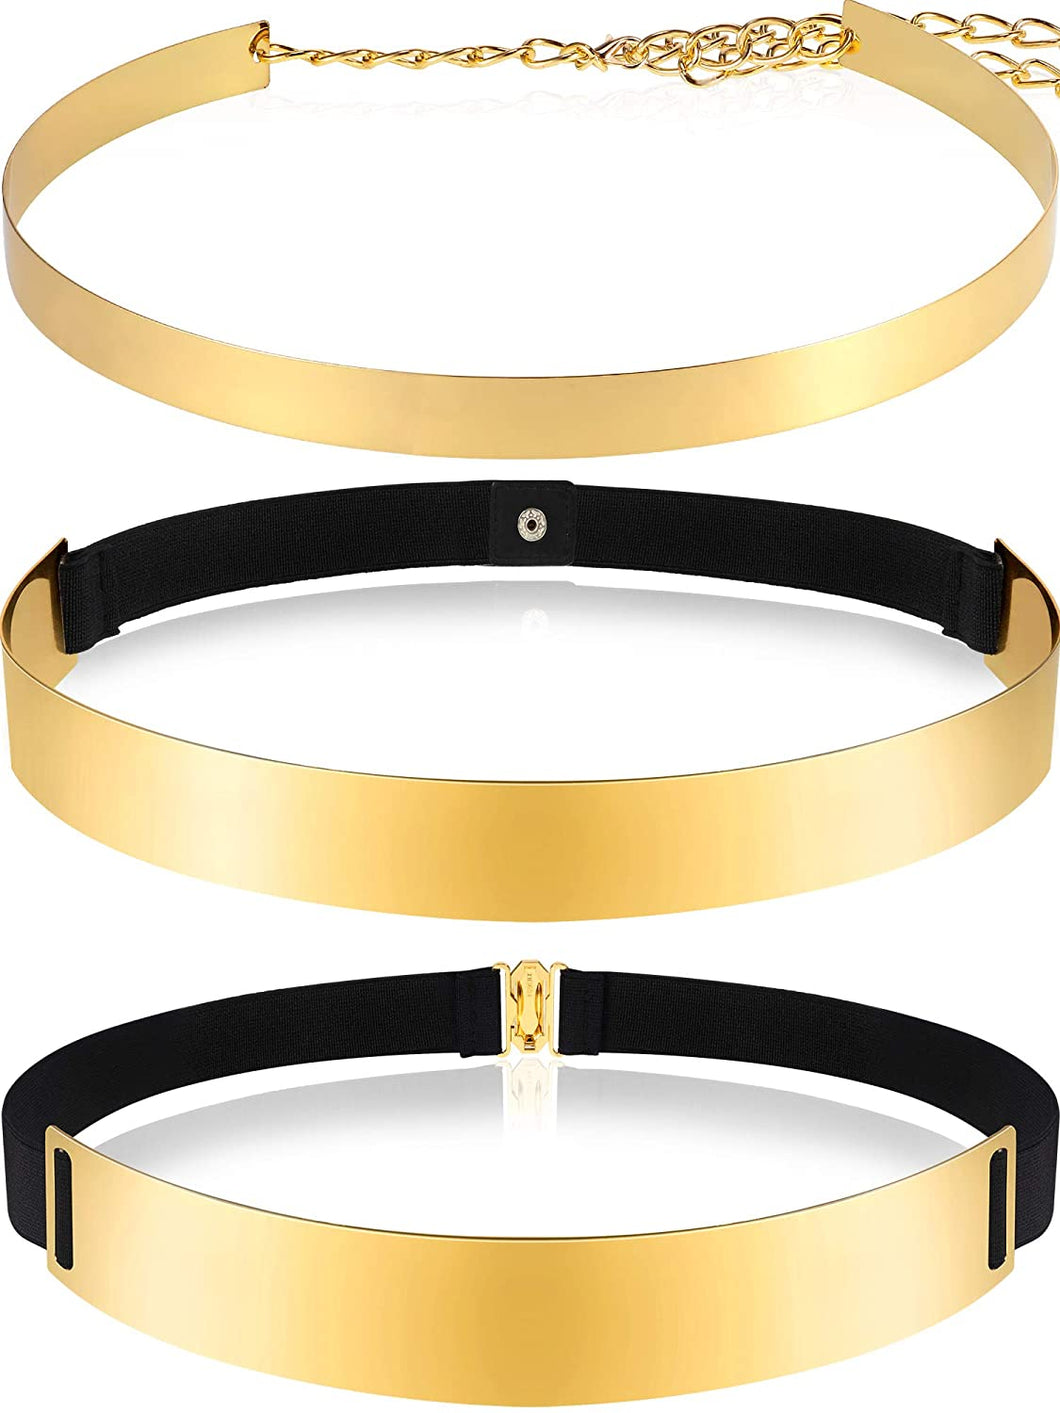 3 Pieces Gold Metal Shiny Adjustable Belt